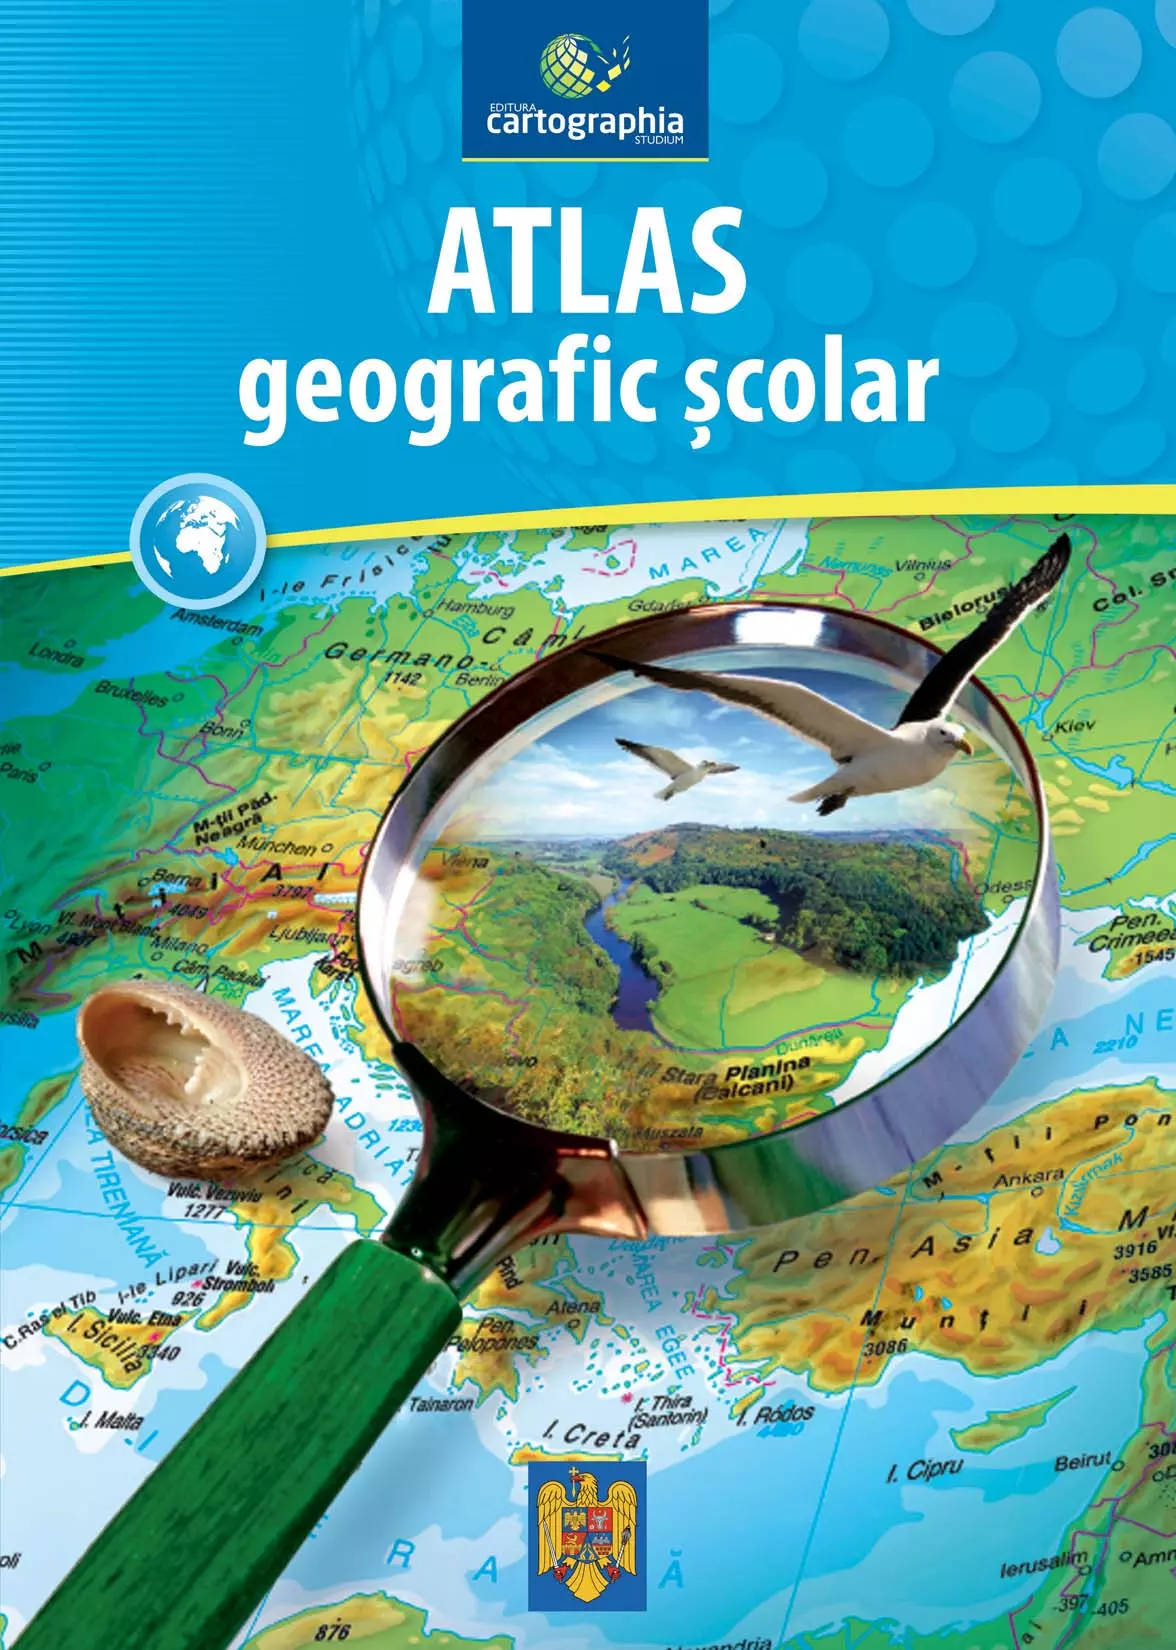 Atlas geografic şcolar (CR-3010)